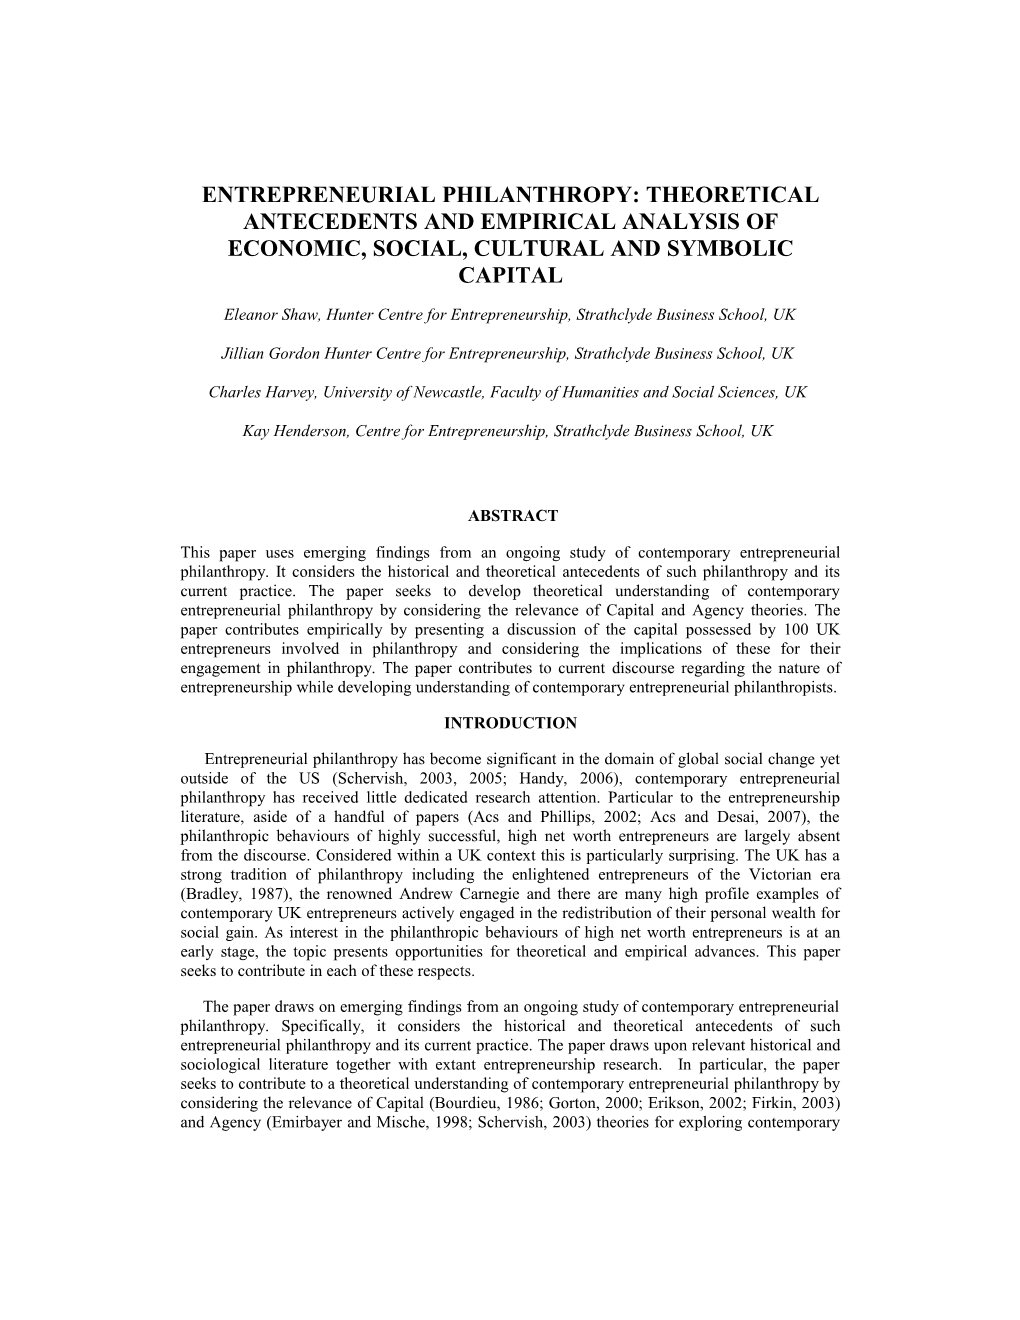 Entrepreneurial Philanthropy: Theoretical Antecedents and Empirical Analysis of Economic